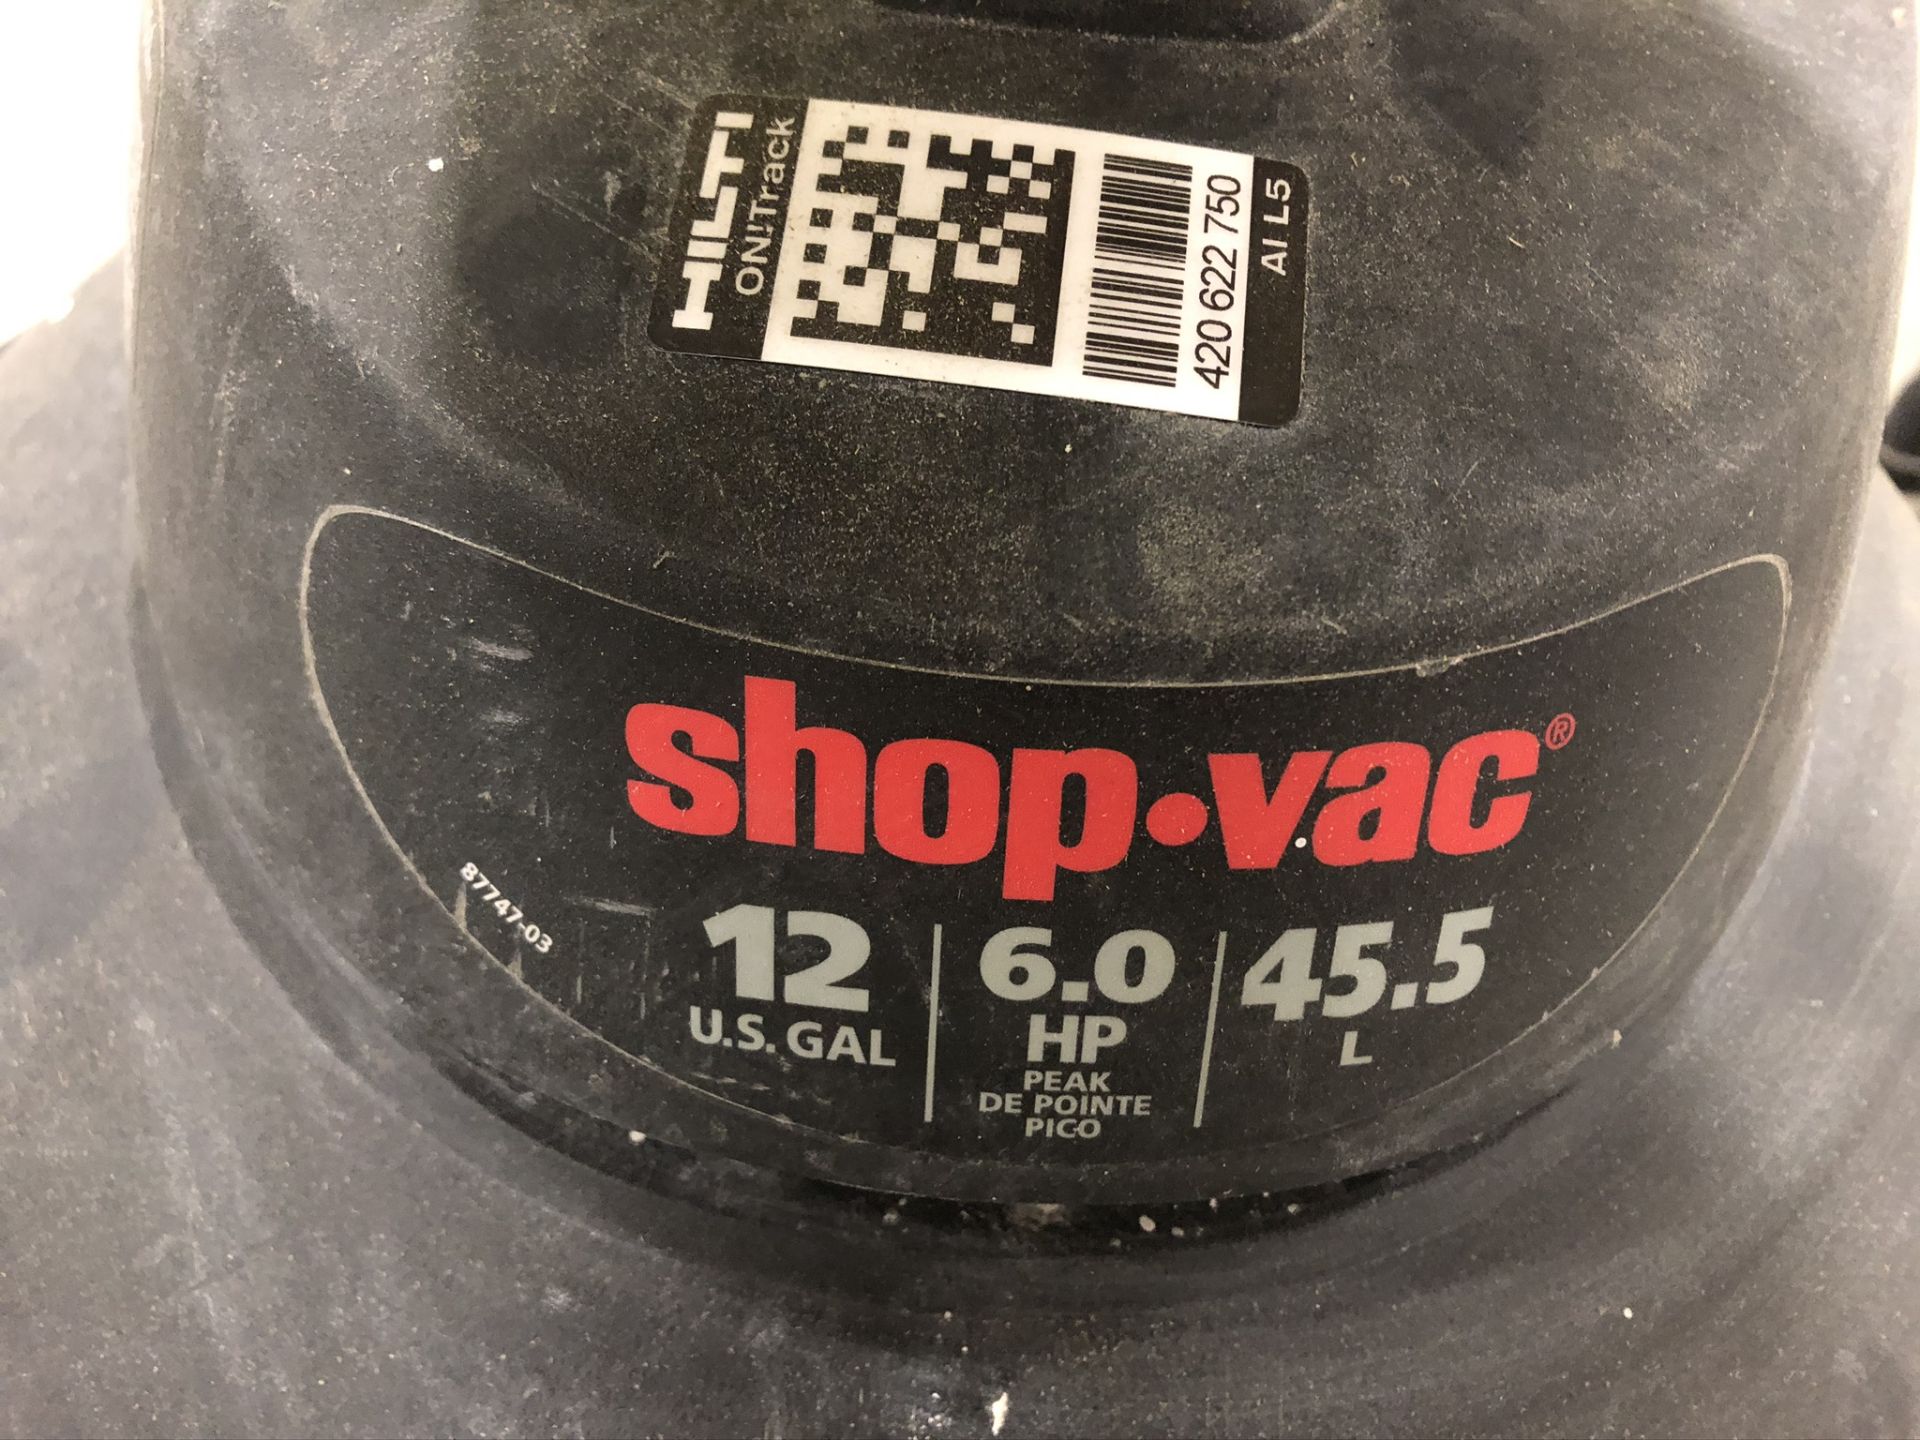 SHOP-VAC, 6 HP, WET / DRY VACUUM - Image 2 of 2